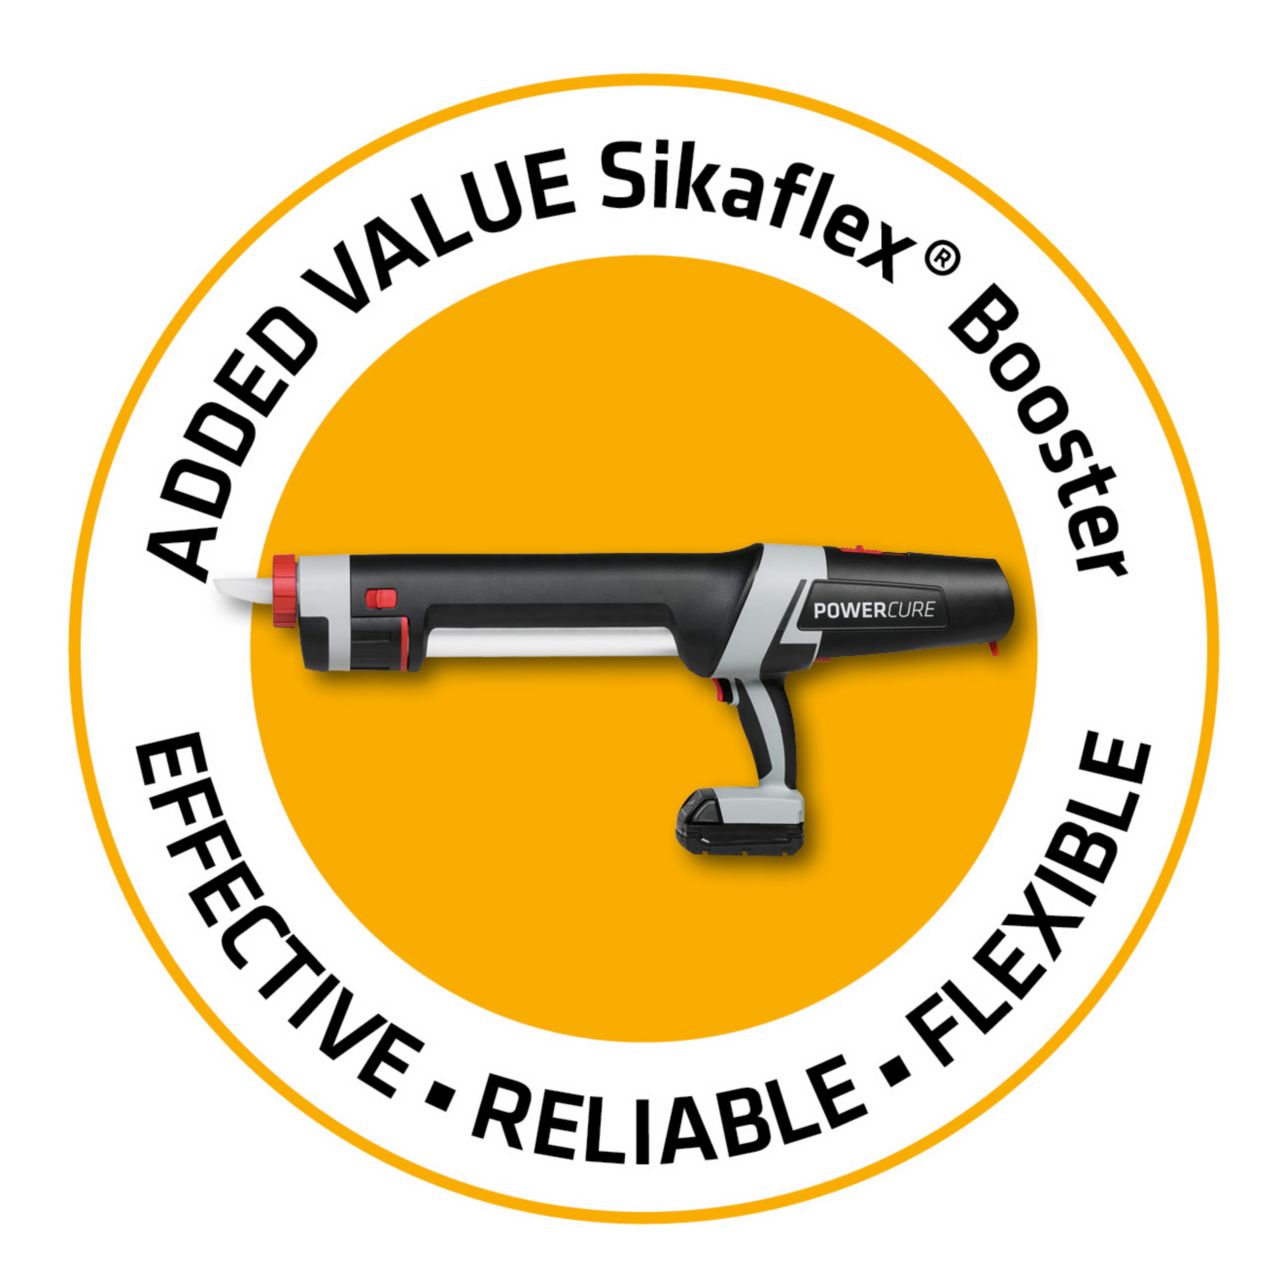 Added Value Sikaflex® Booster